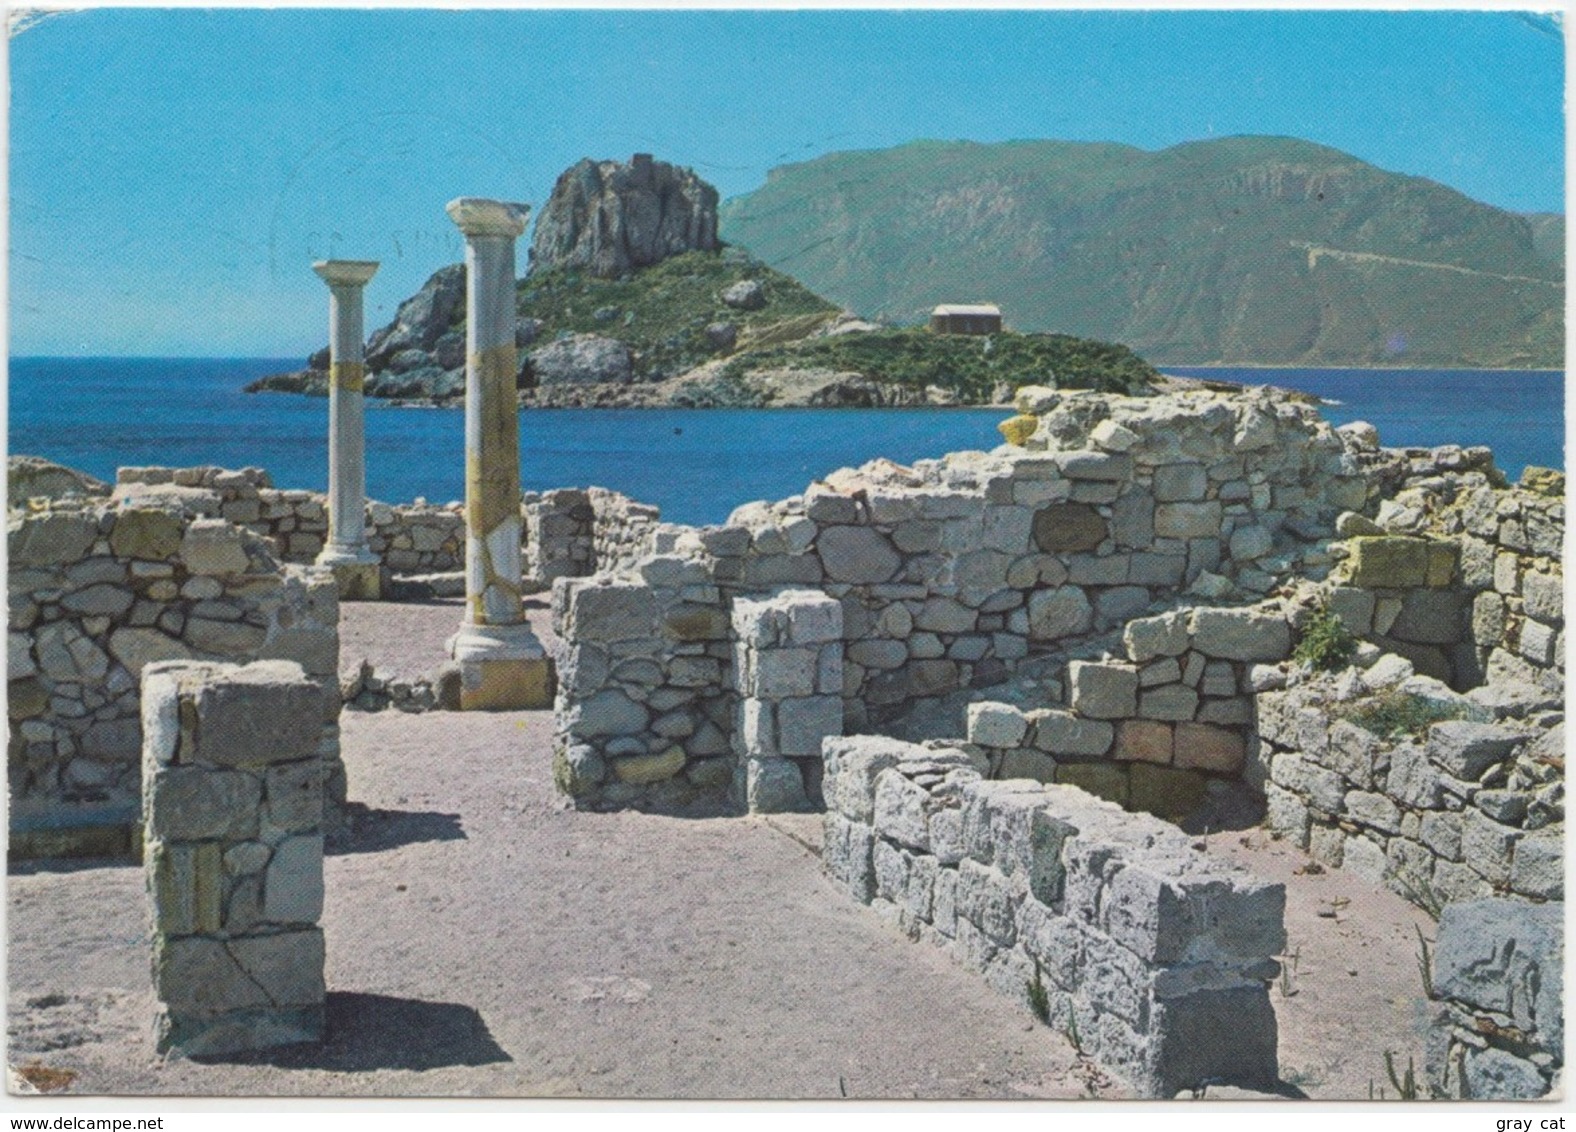 COS ISLAND, Basilica Of St. Stephen, Greece, 1977 Used Postcard [22093] - Grèce